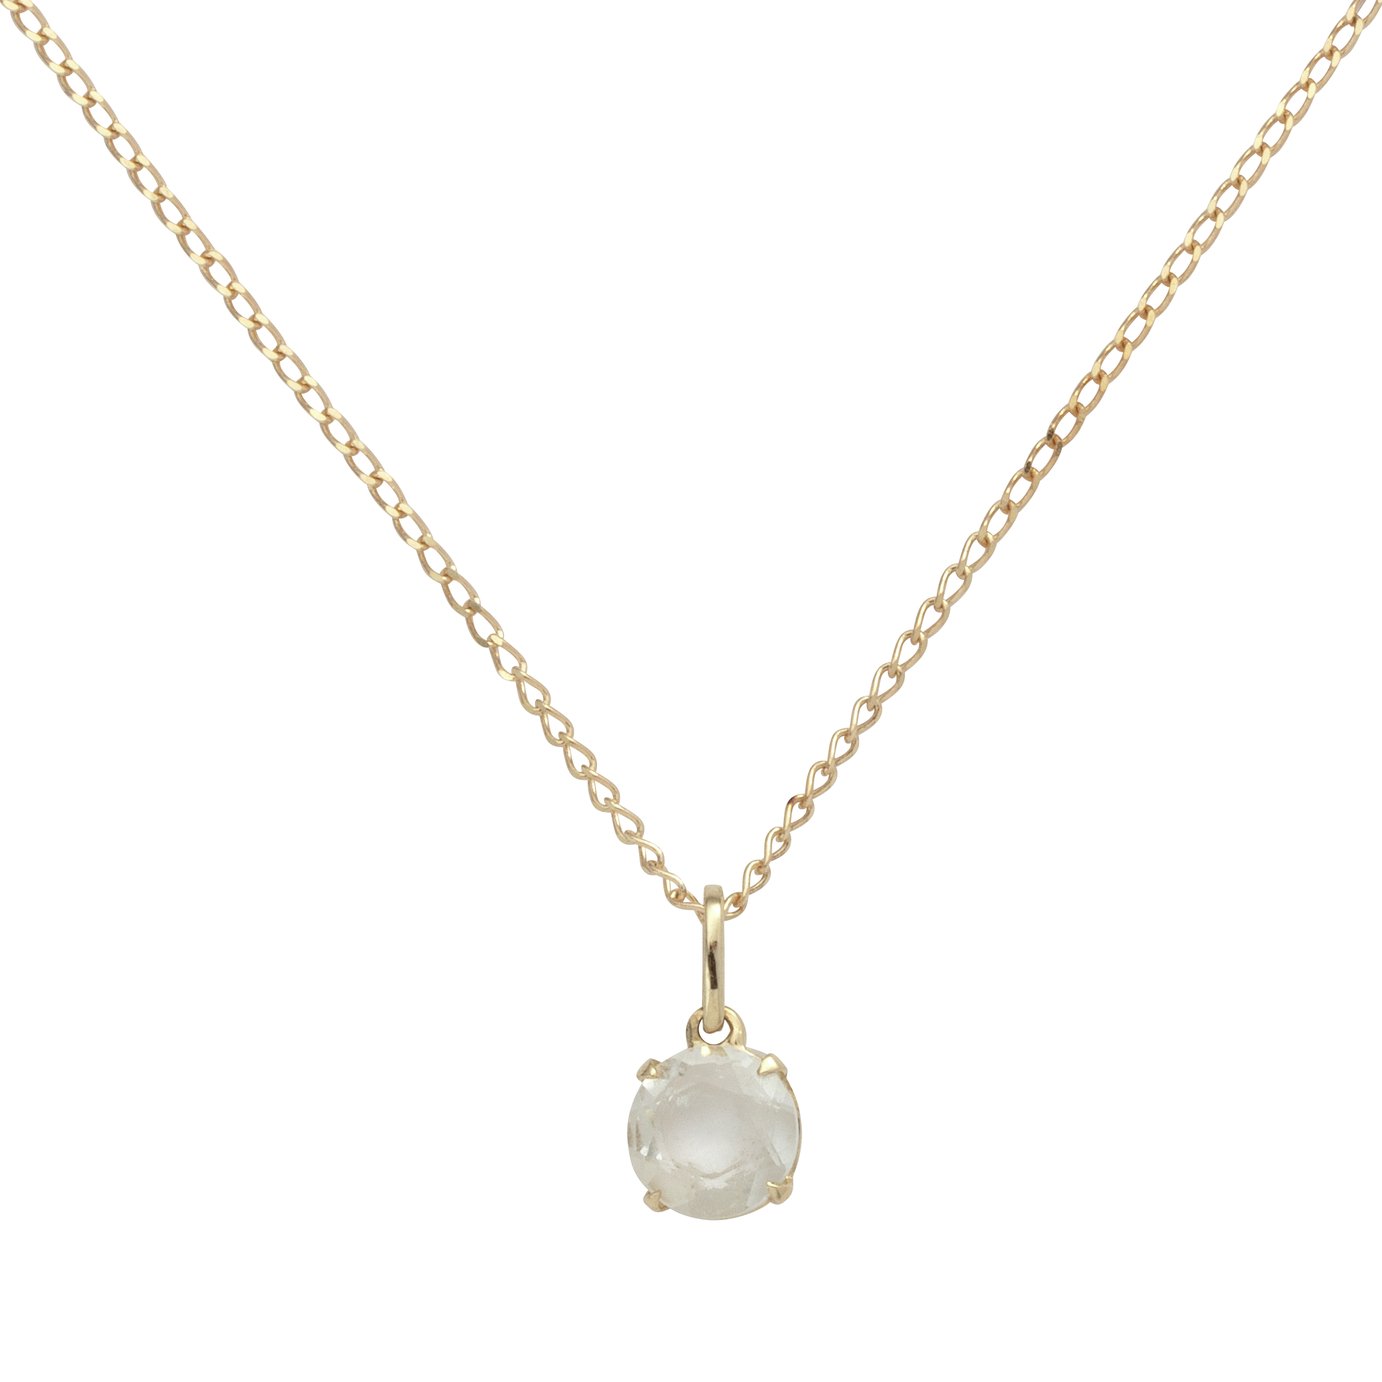 Revere 9ct Gold White Topaz Pendant Necklace - April